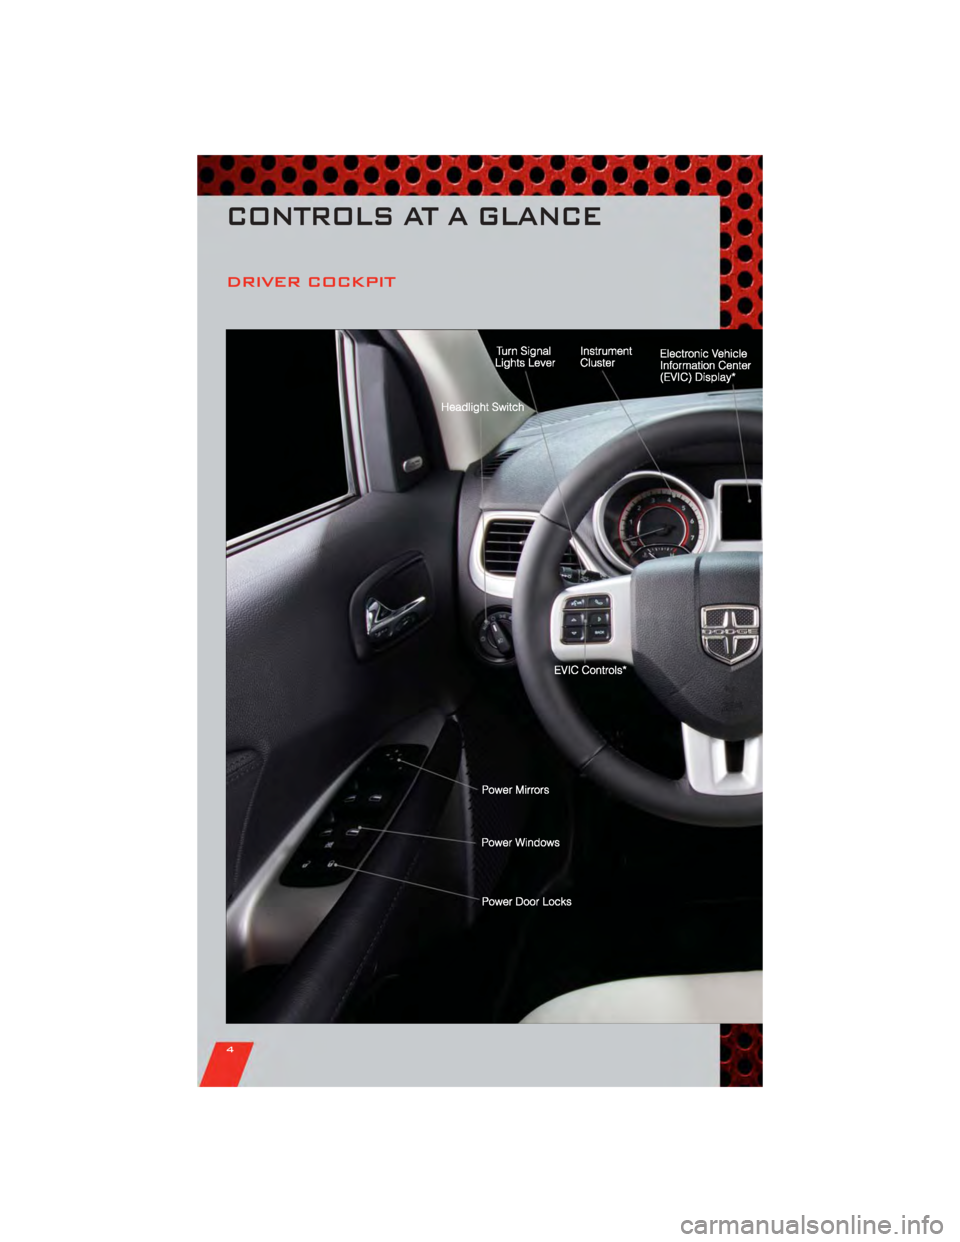 DODGE JOURNEY 2011 1.G User Guide DRIVER COCKPIT
CONTROLS AT A GLANCE
4 